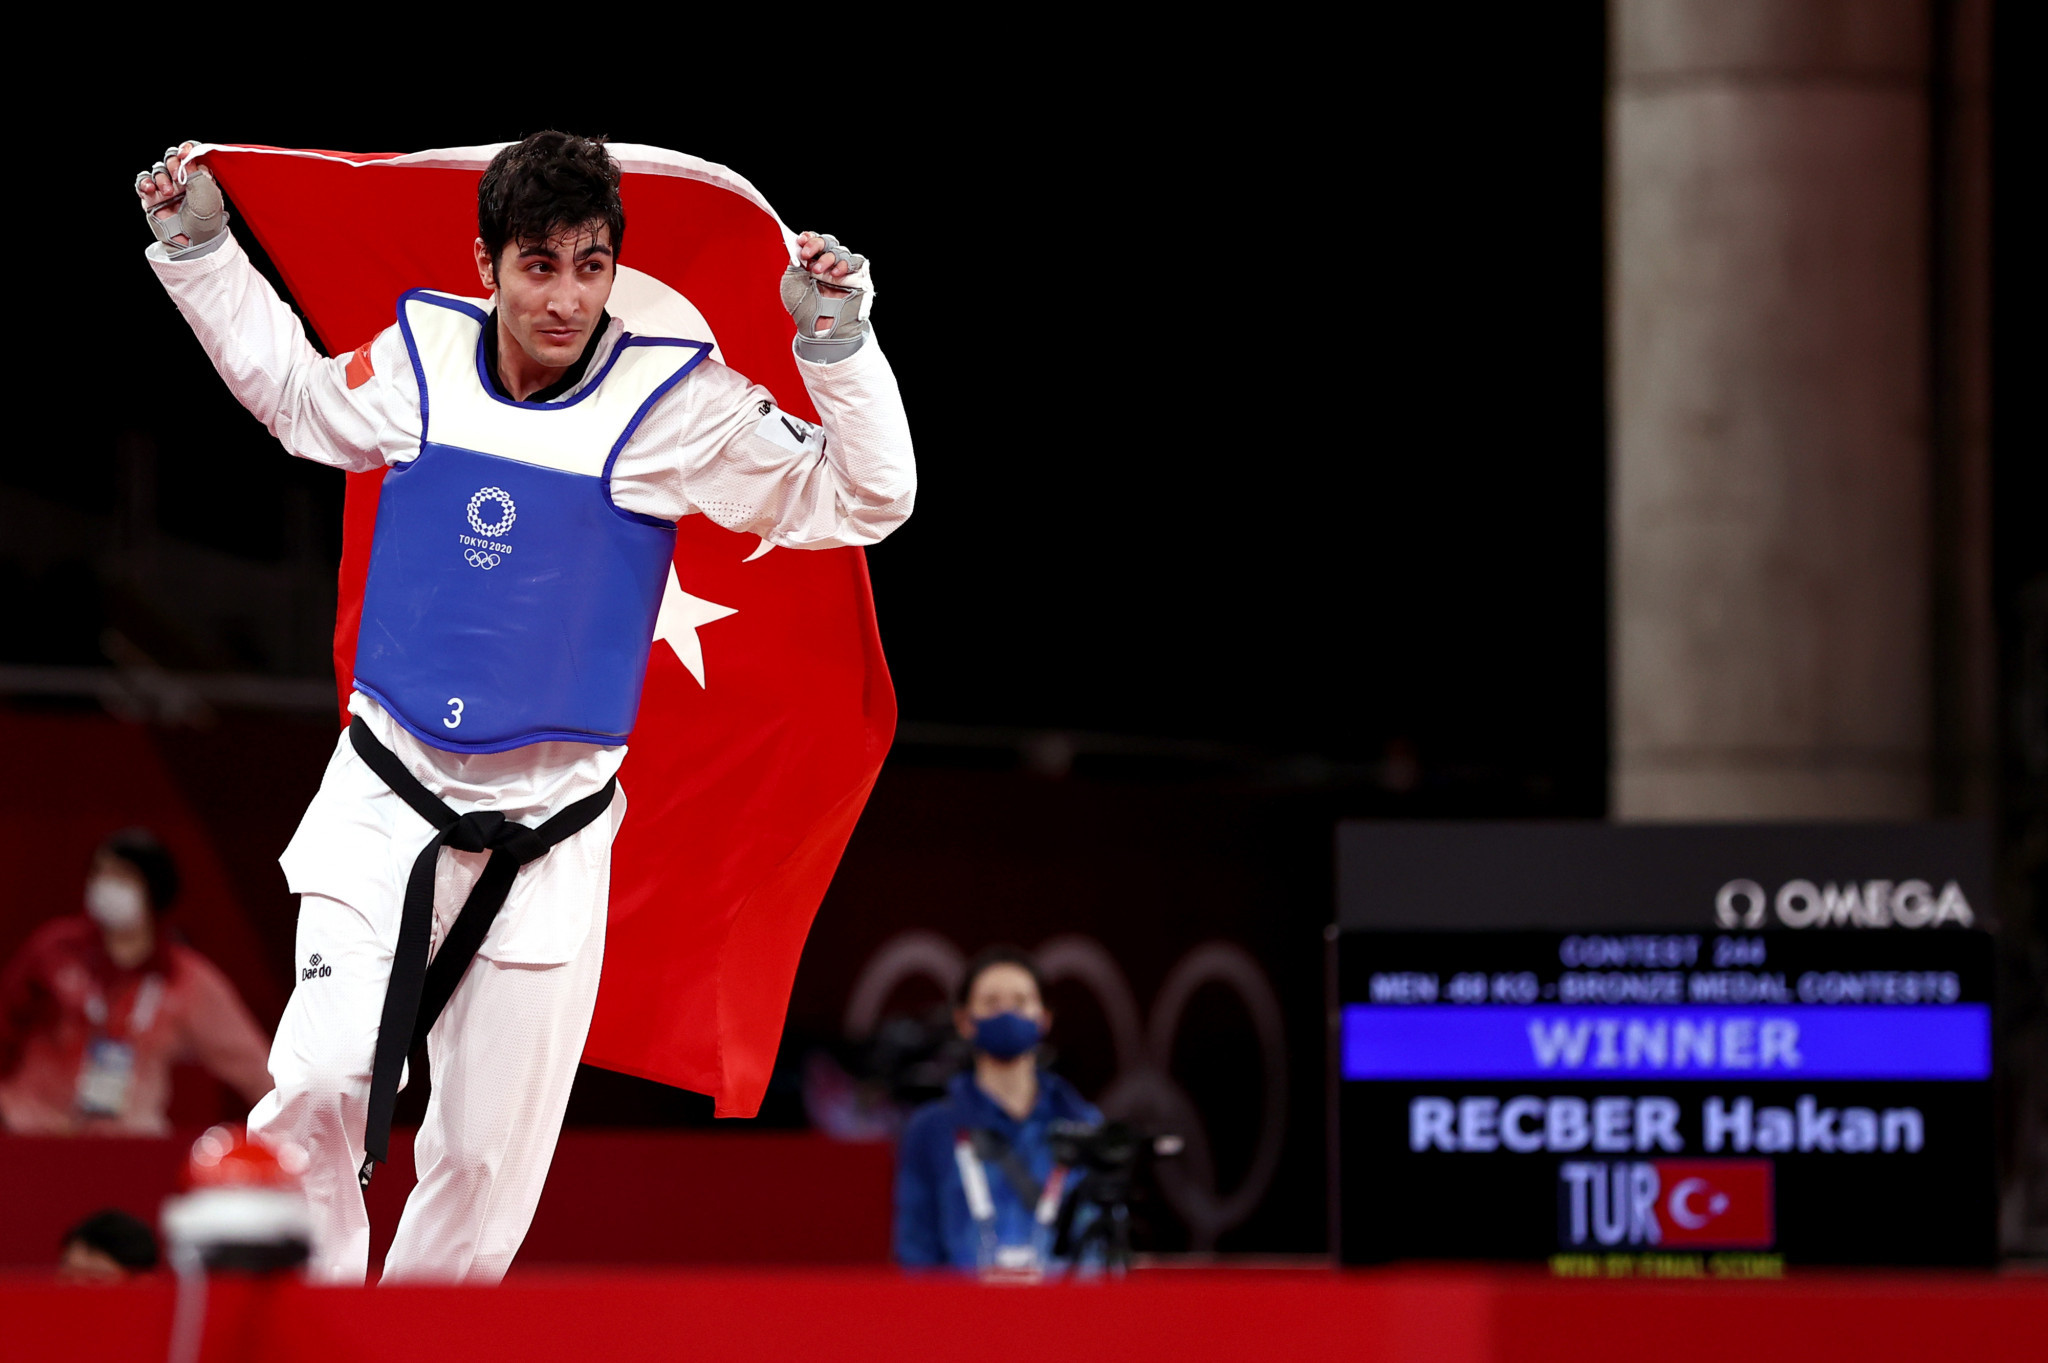 Hakan Reçber won the men's under-63 kilograms world title in Baku ©Getty Images